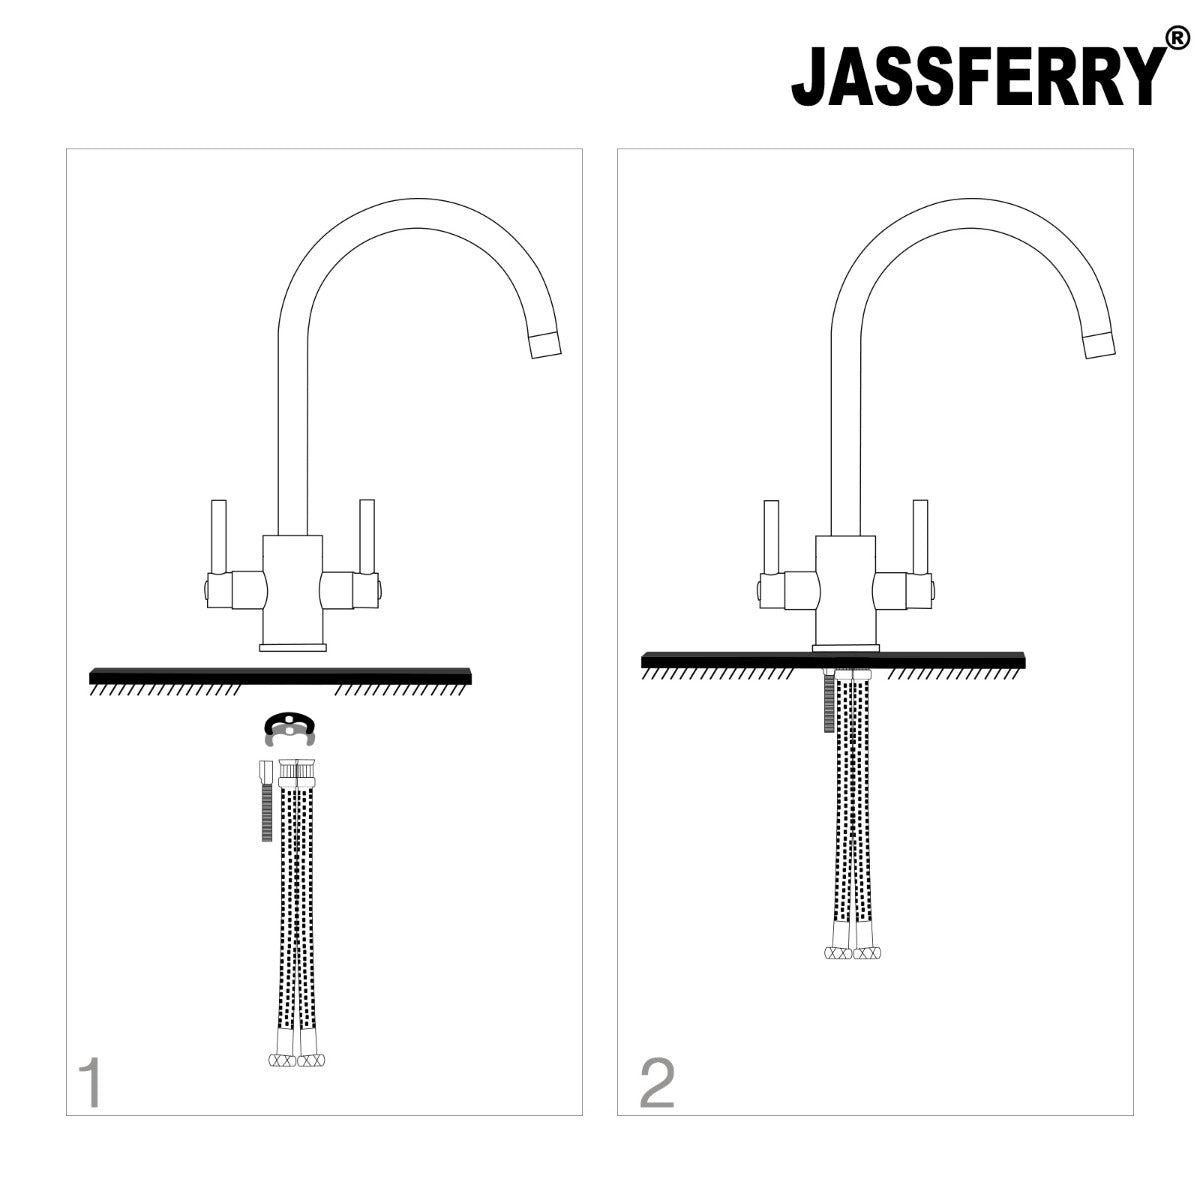 JassferryJASSFERRY New Modern Kitchen Sink Mixer Tap Two Handle Swivel Spout ChromeKitchen taps